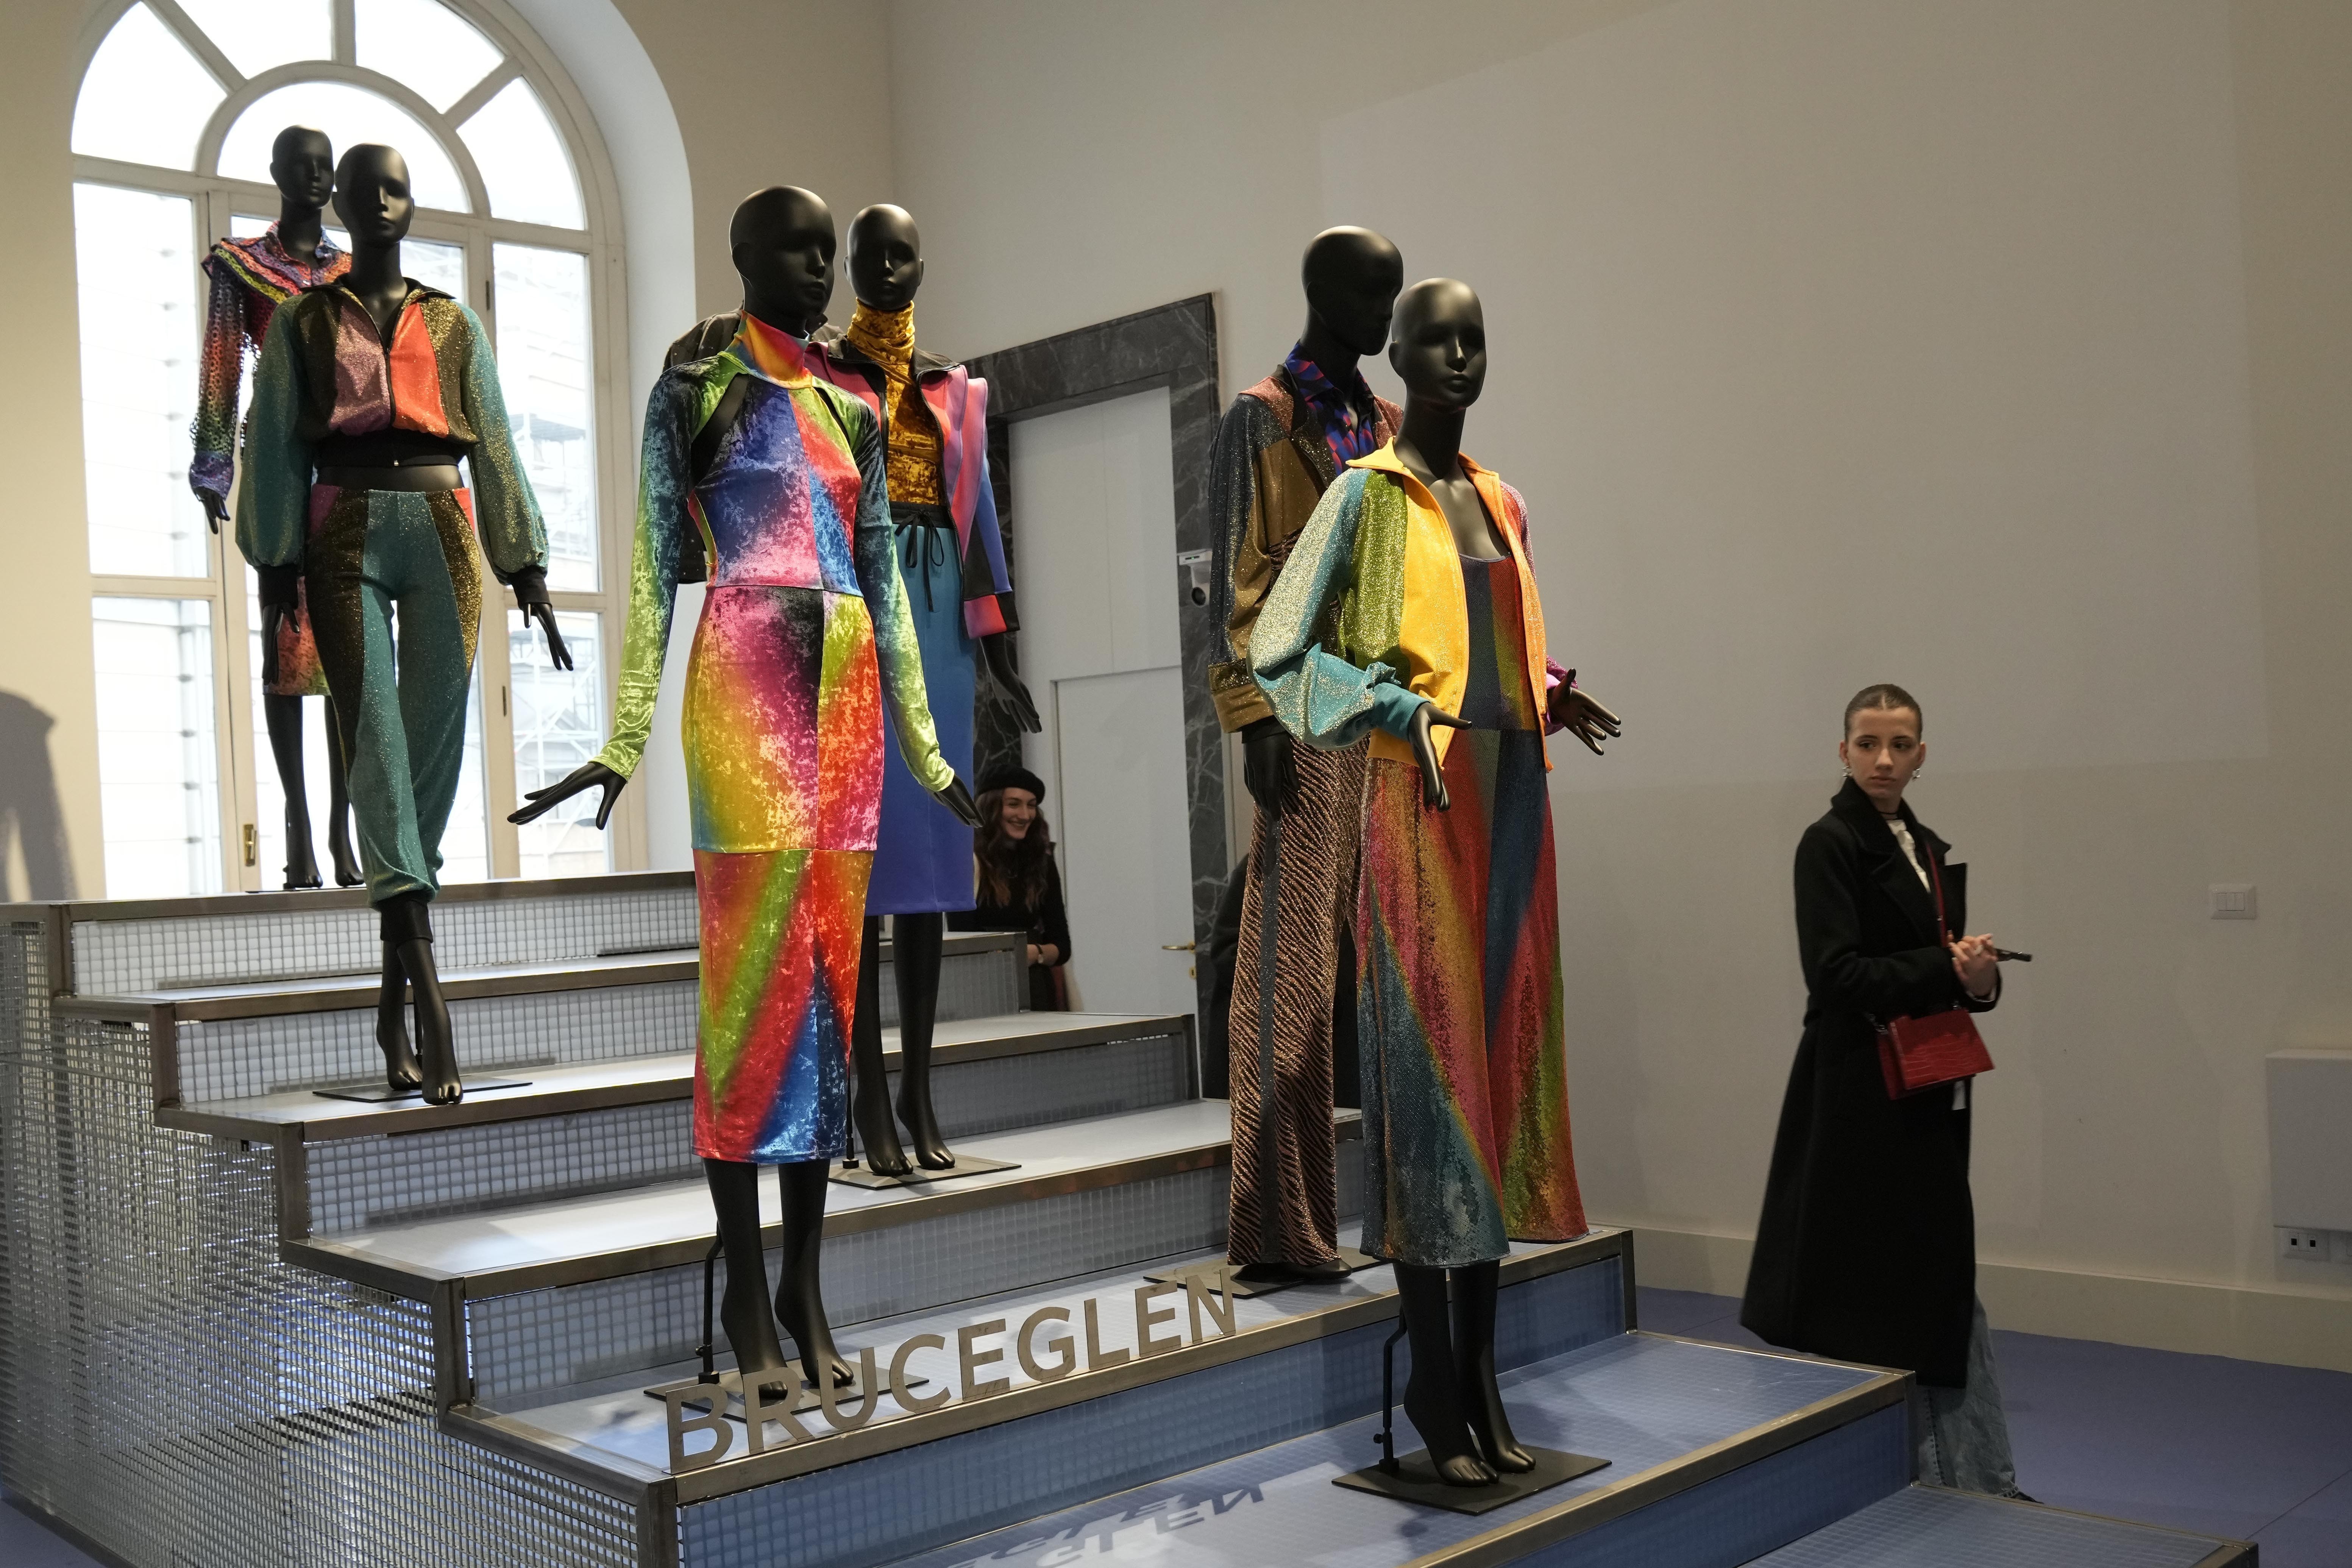 Milan Fashion Week showcases emerging Black designers, launches